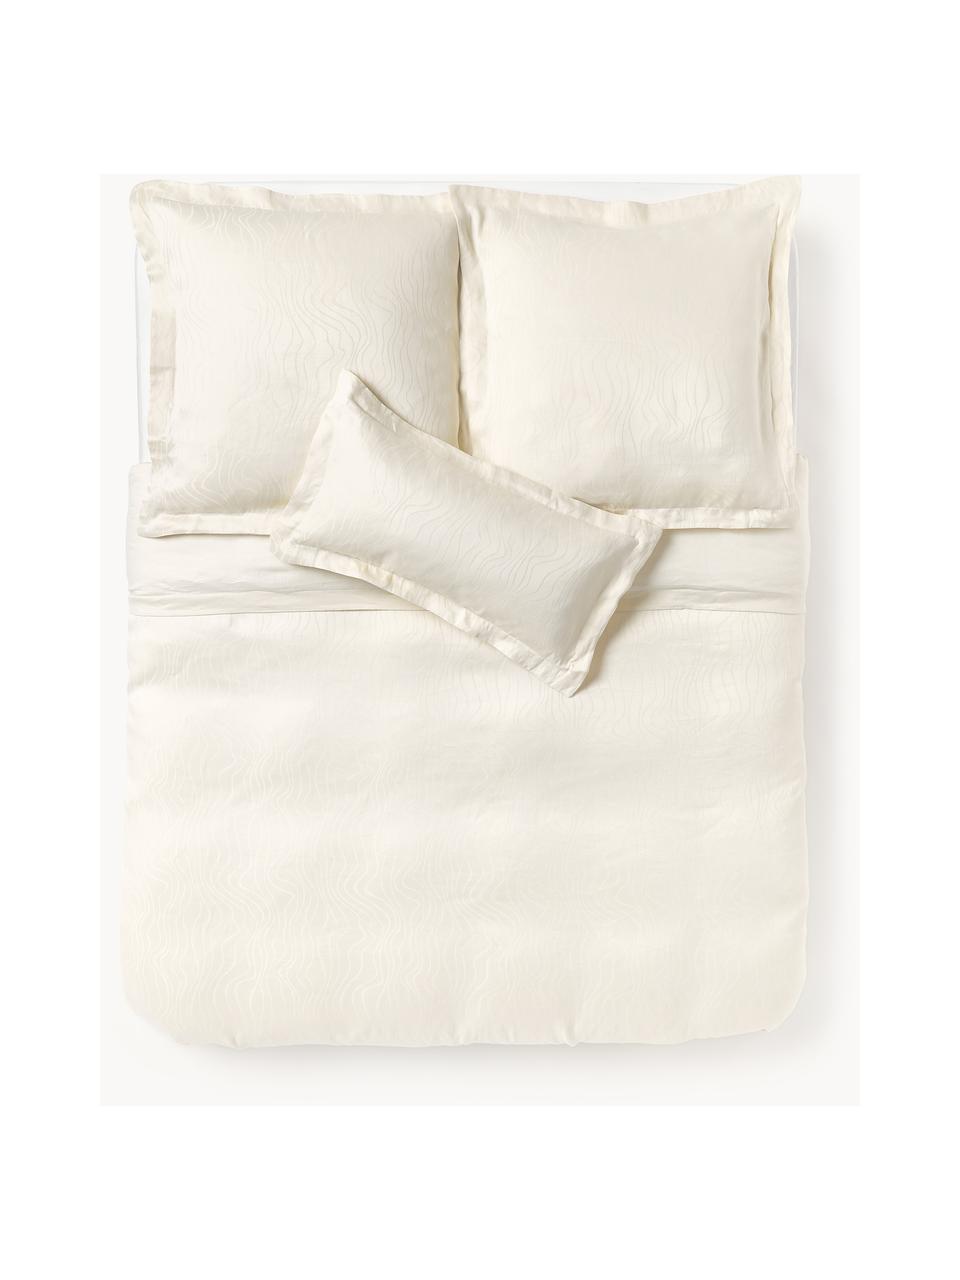 Leinen-Bettdeckenbezug Malia, Off White, B 200 x L 200 cm